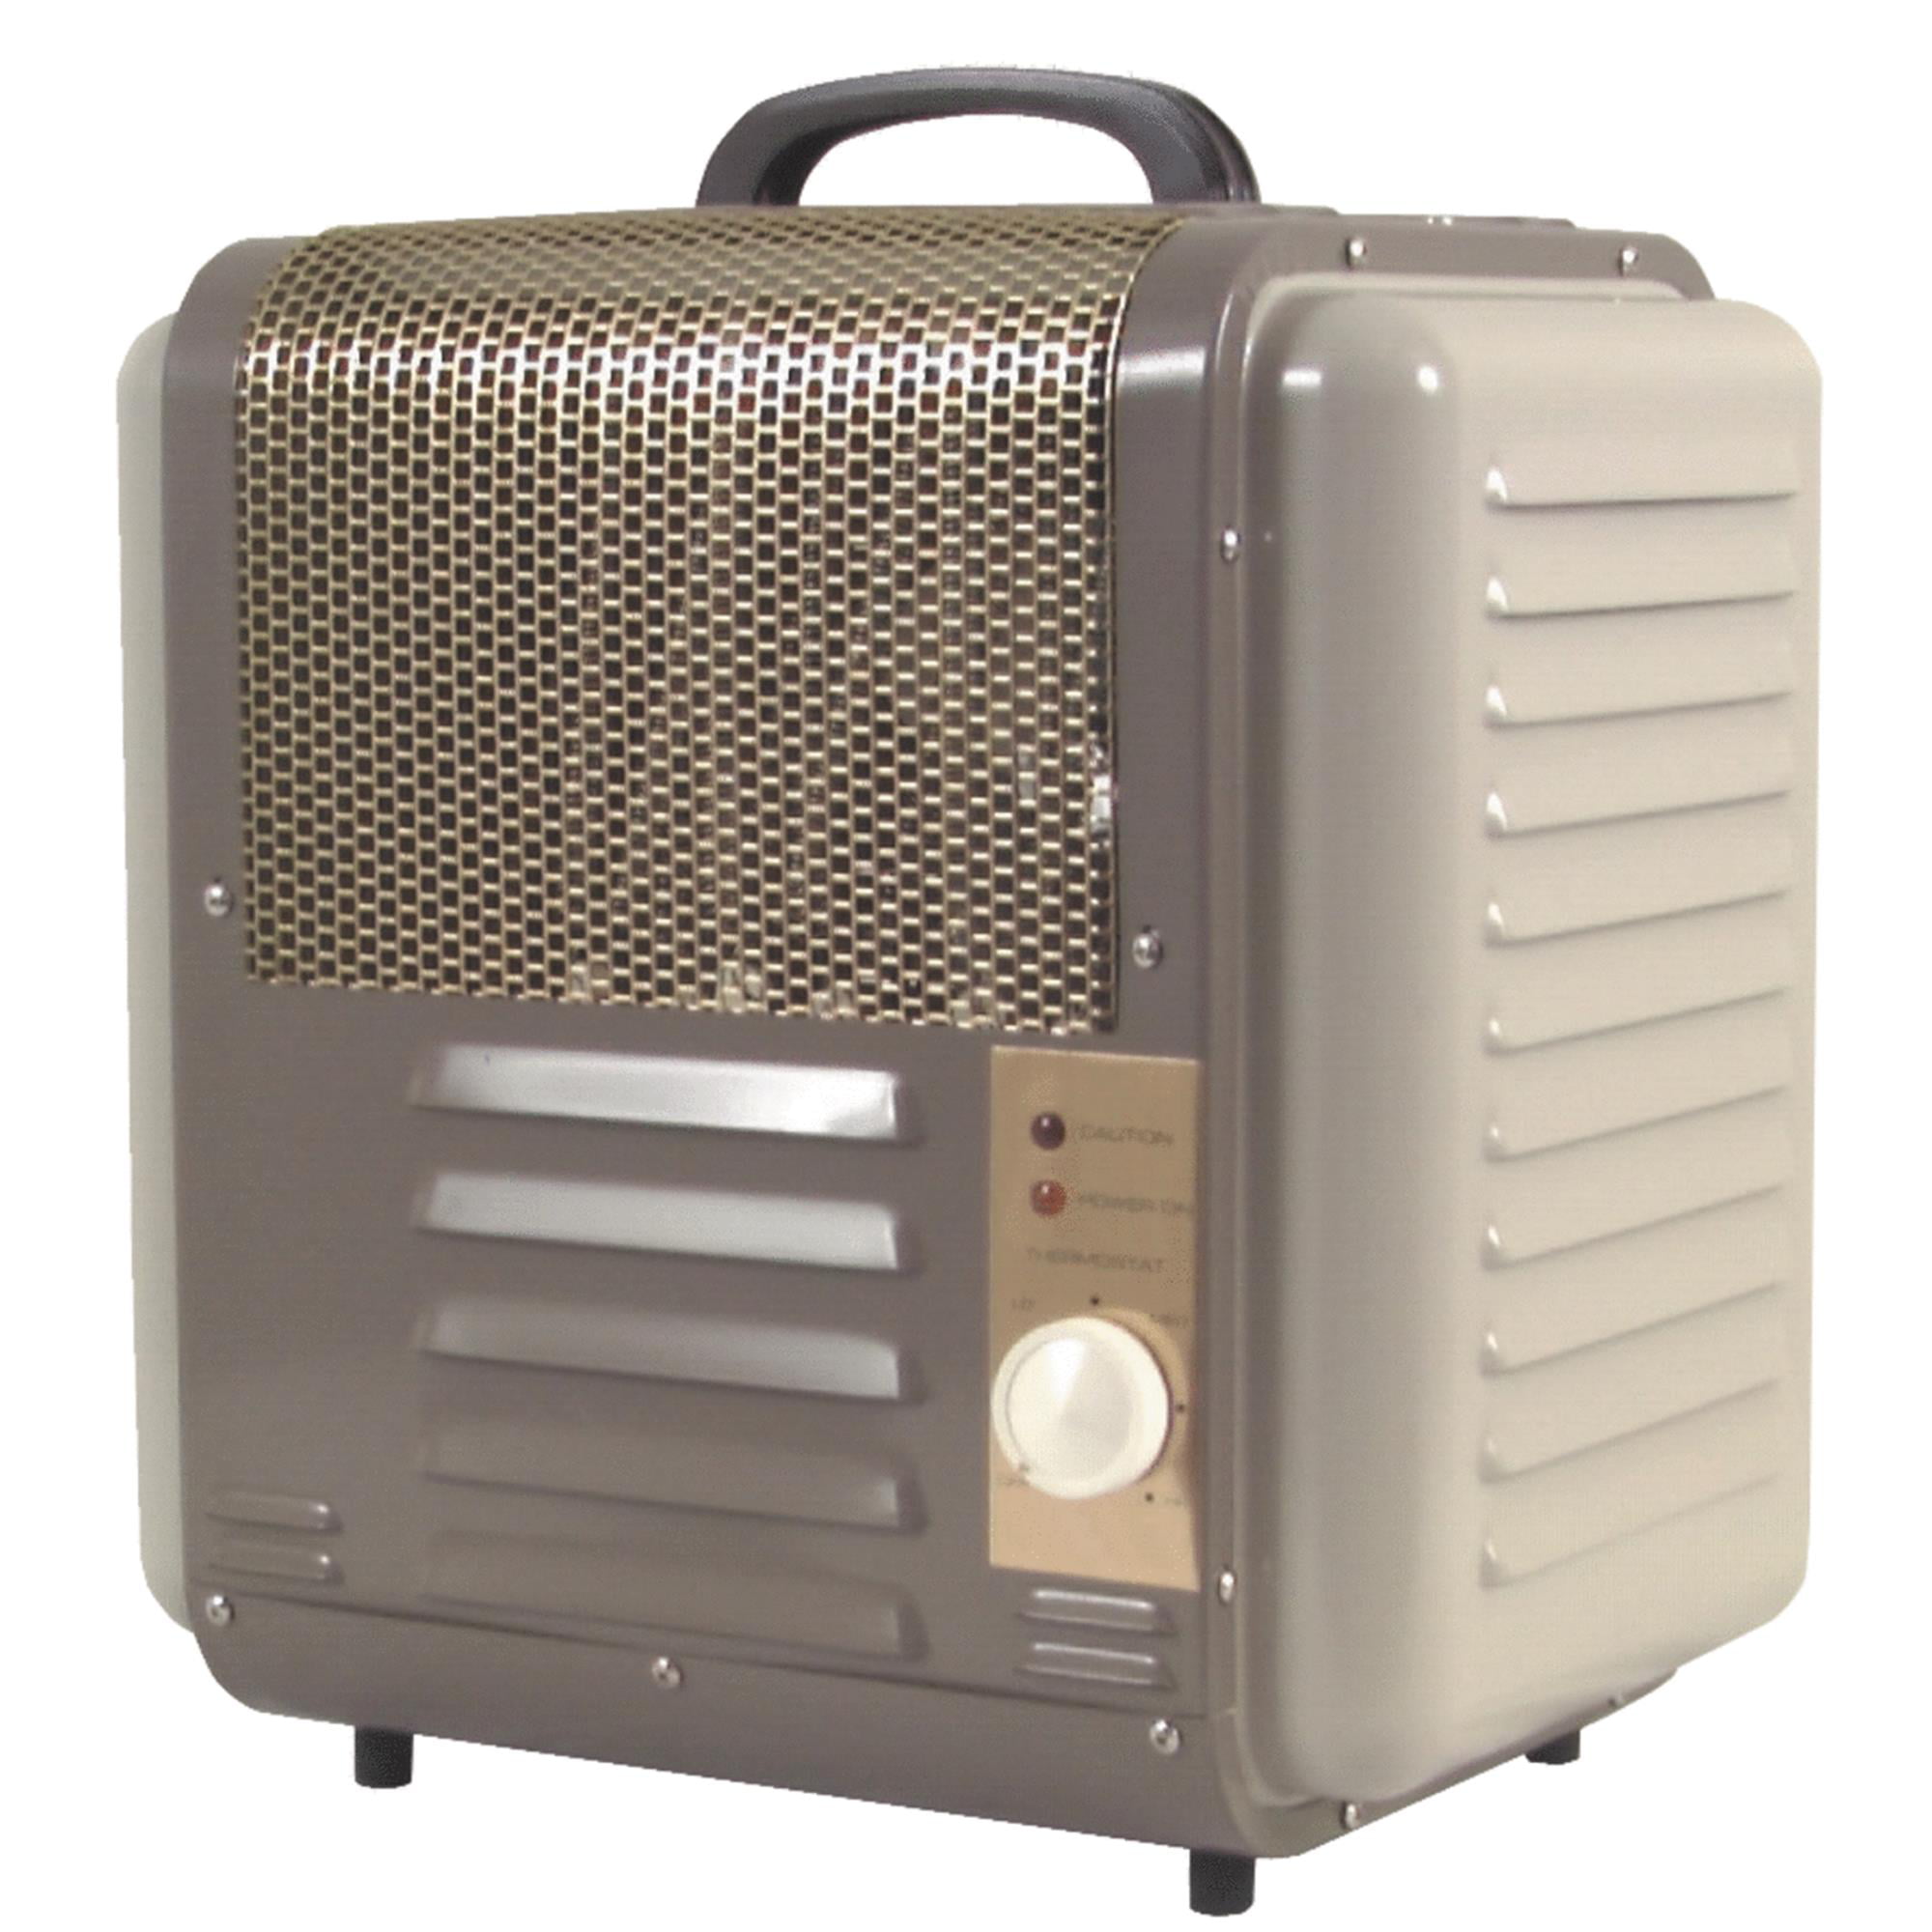 Lasko 5365 - Selecting Best Deal When Looking For Room Heaters